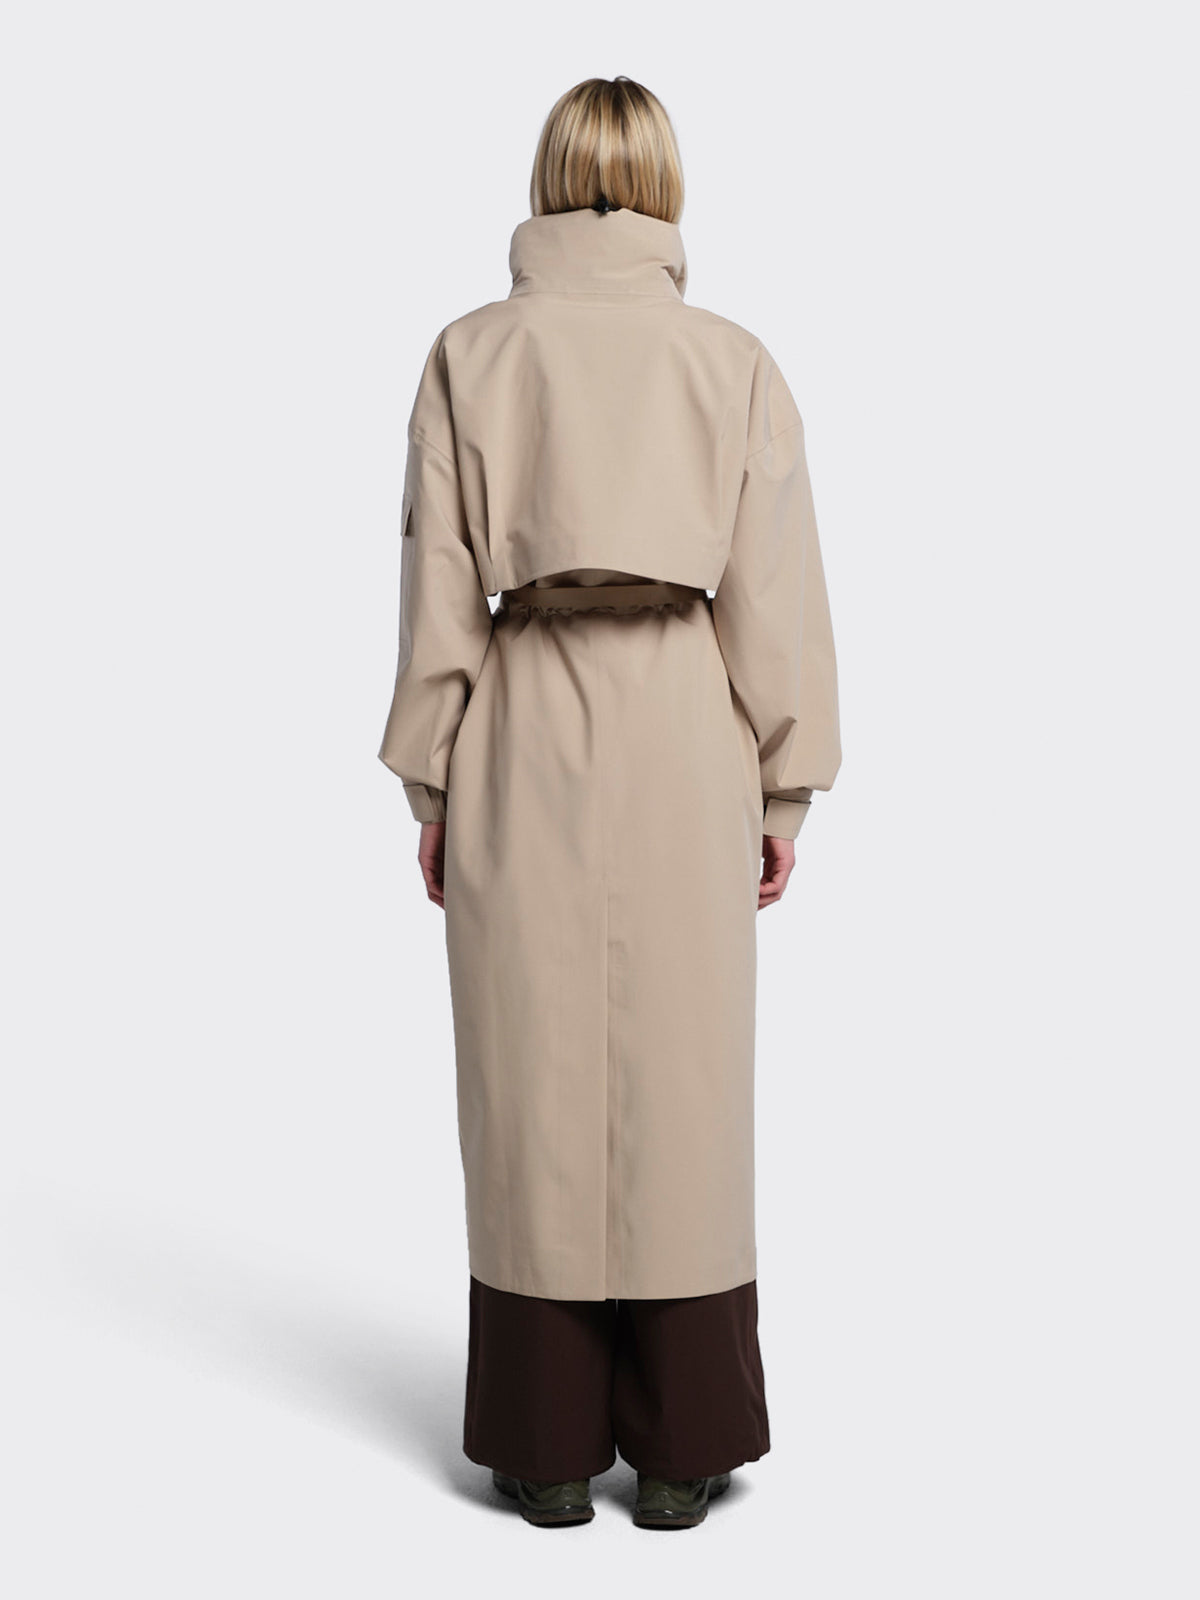 Woman dressed in Klipra coat from Blæst in Beige